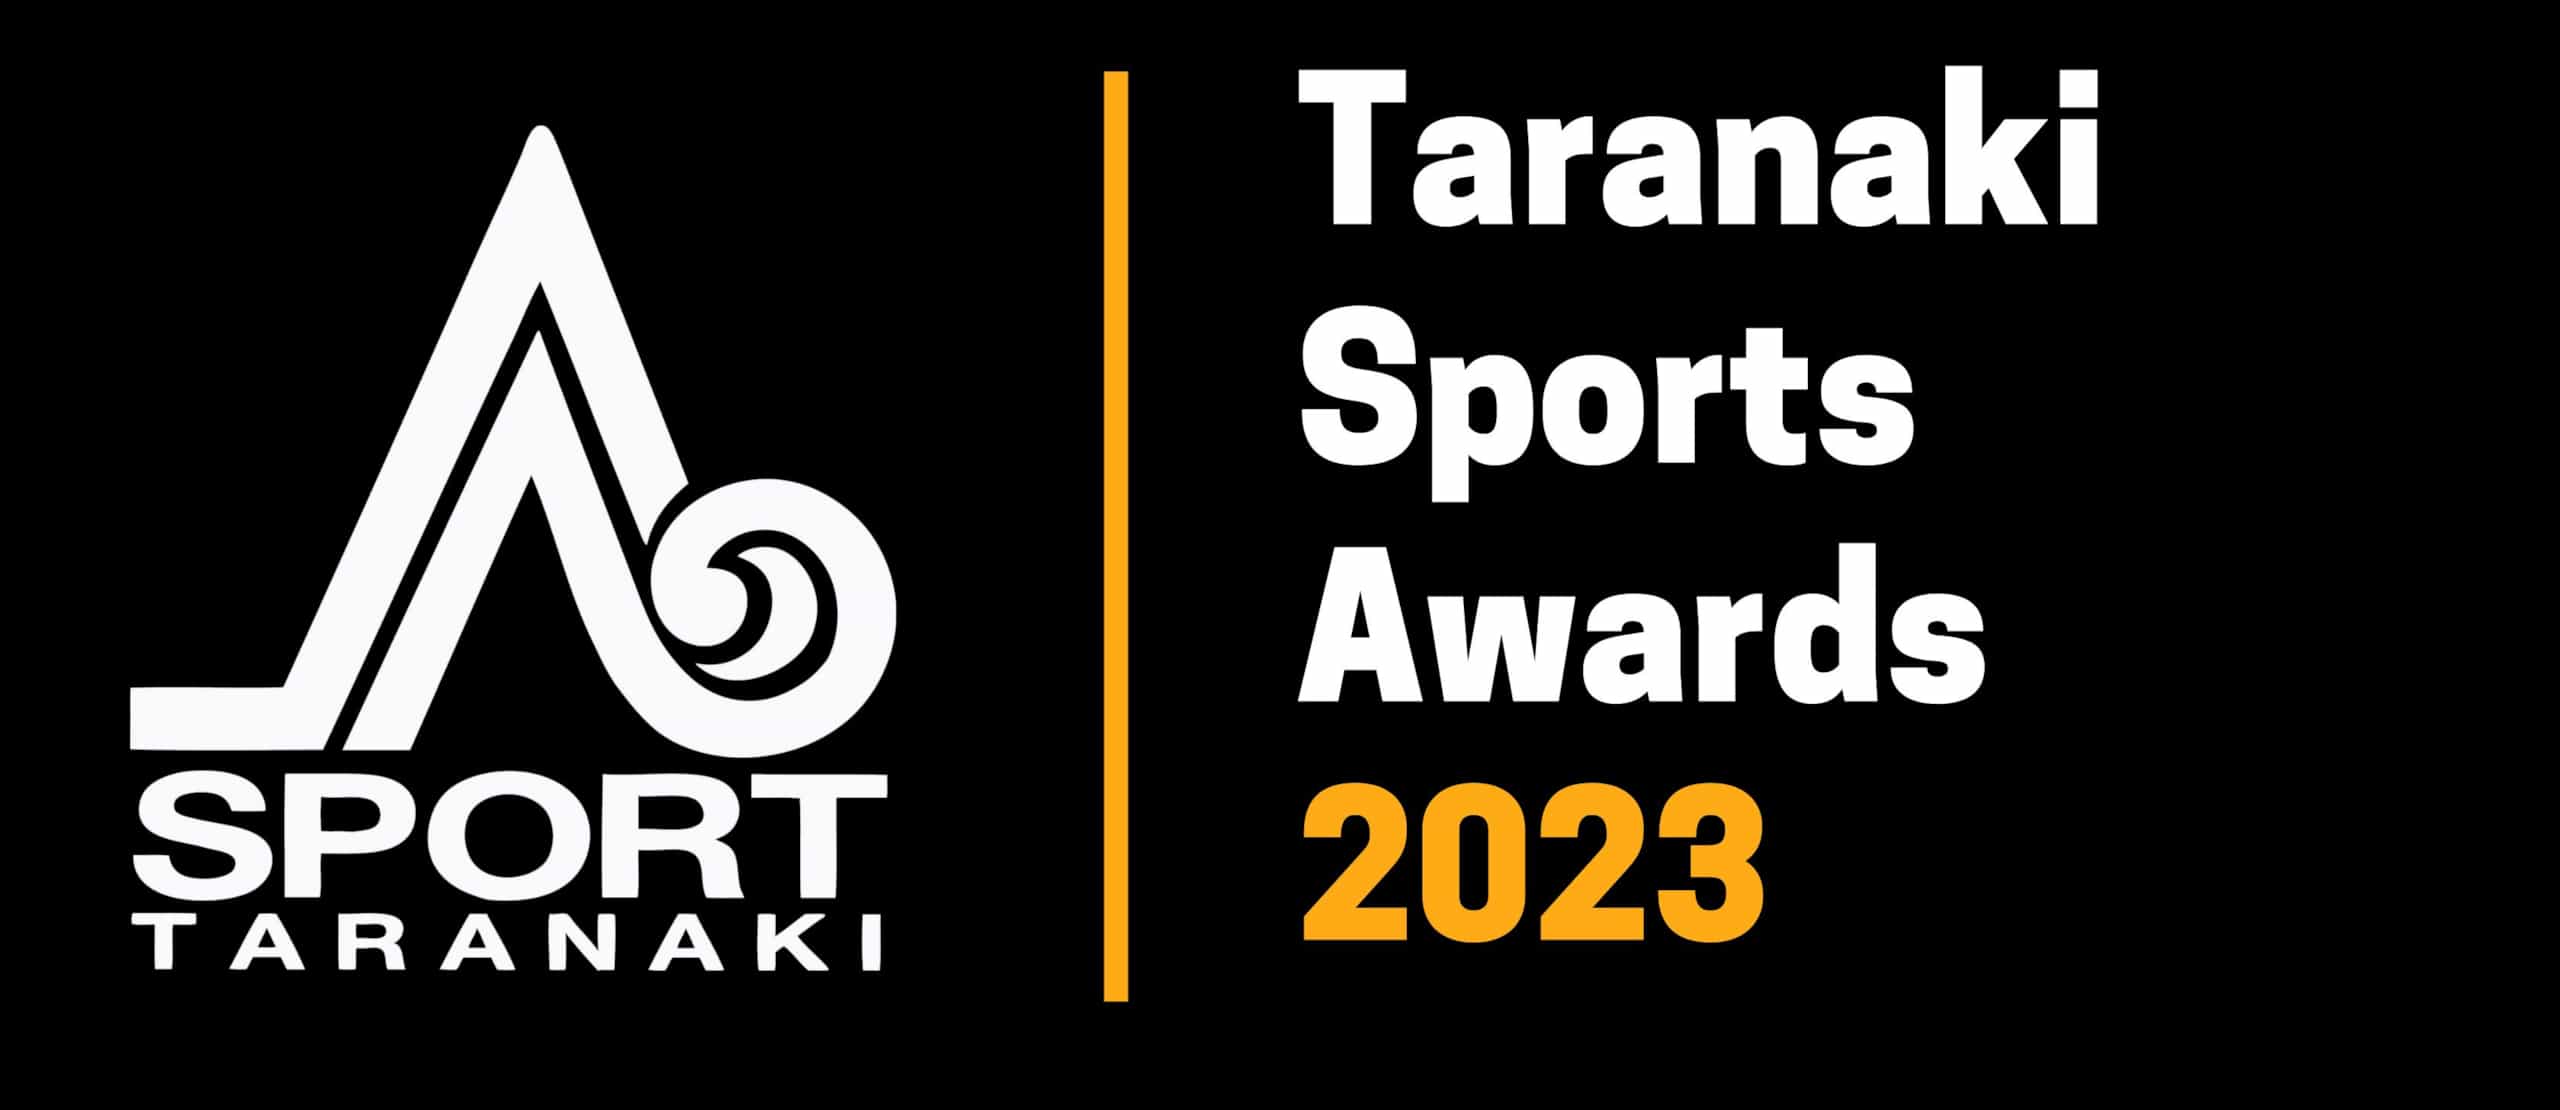 Taranaki Sports Awards 2023 letterhead - 1